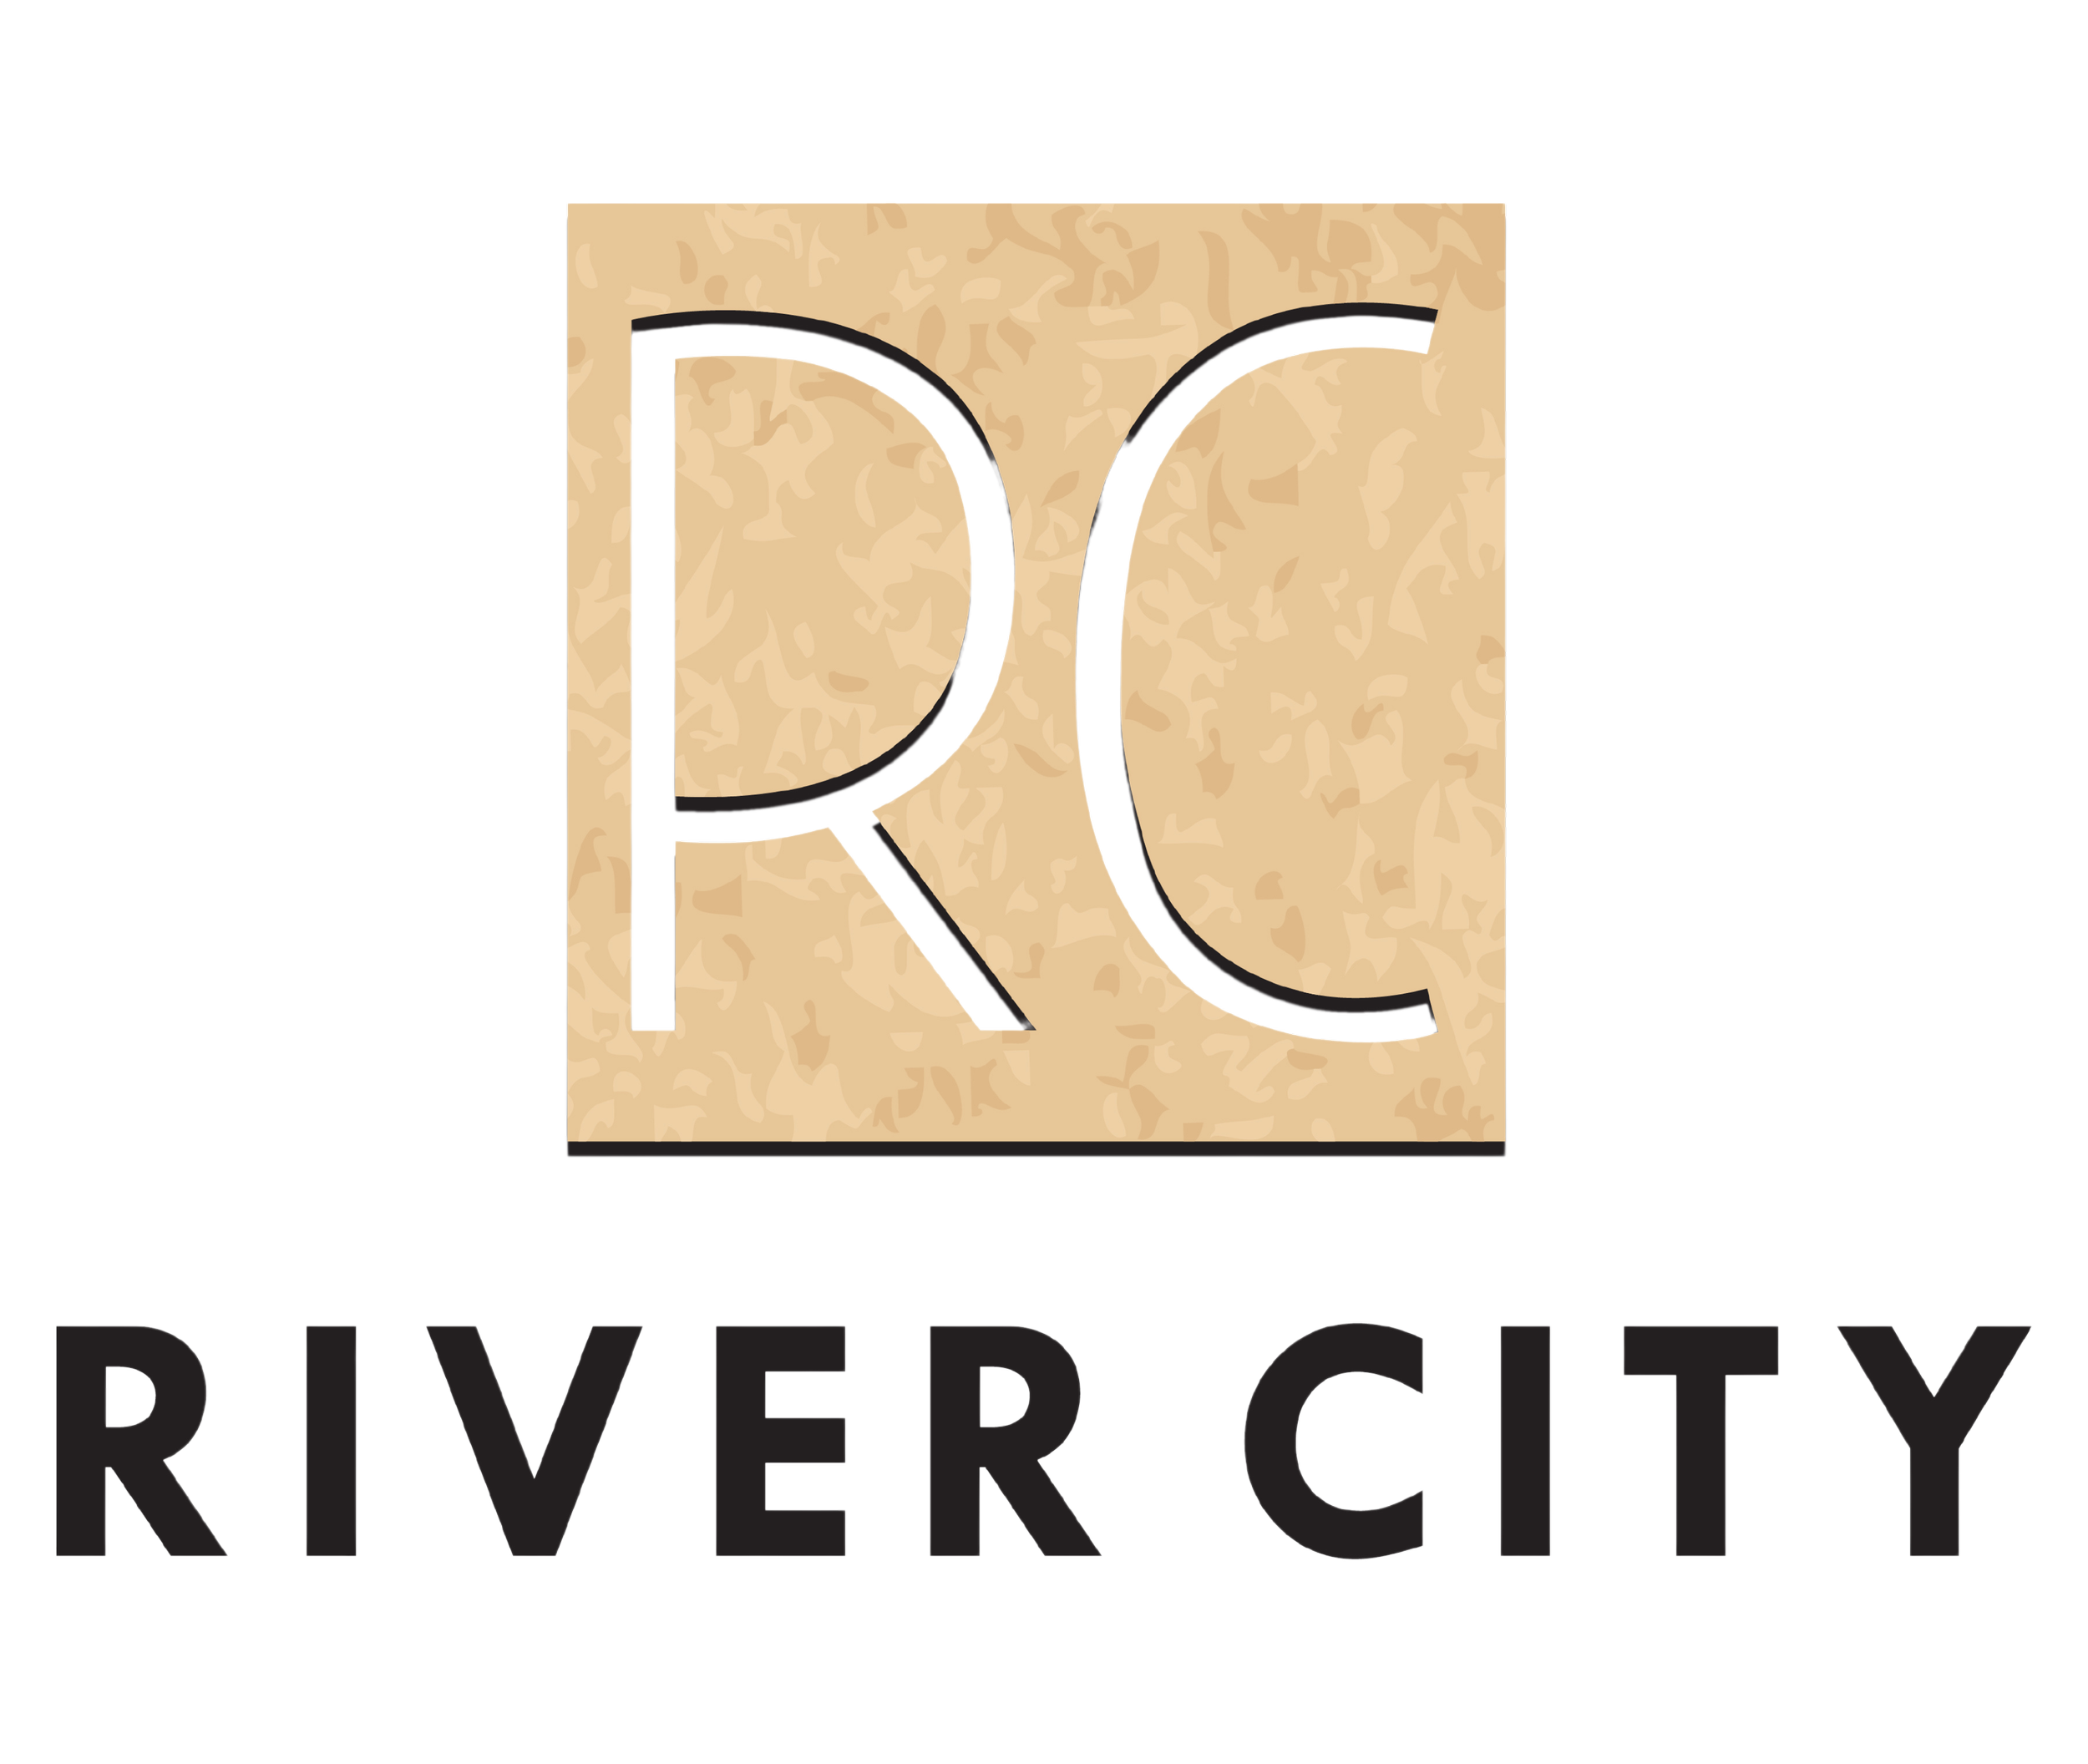 River-city-logo-no-background.png